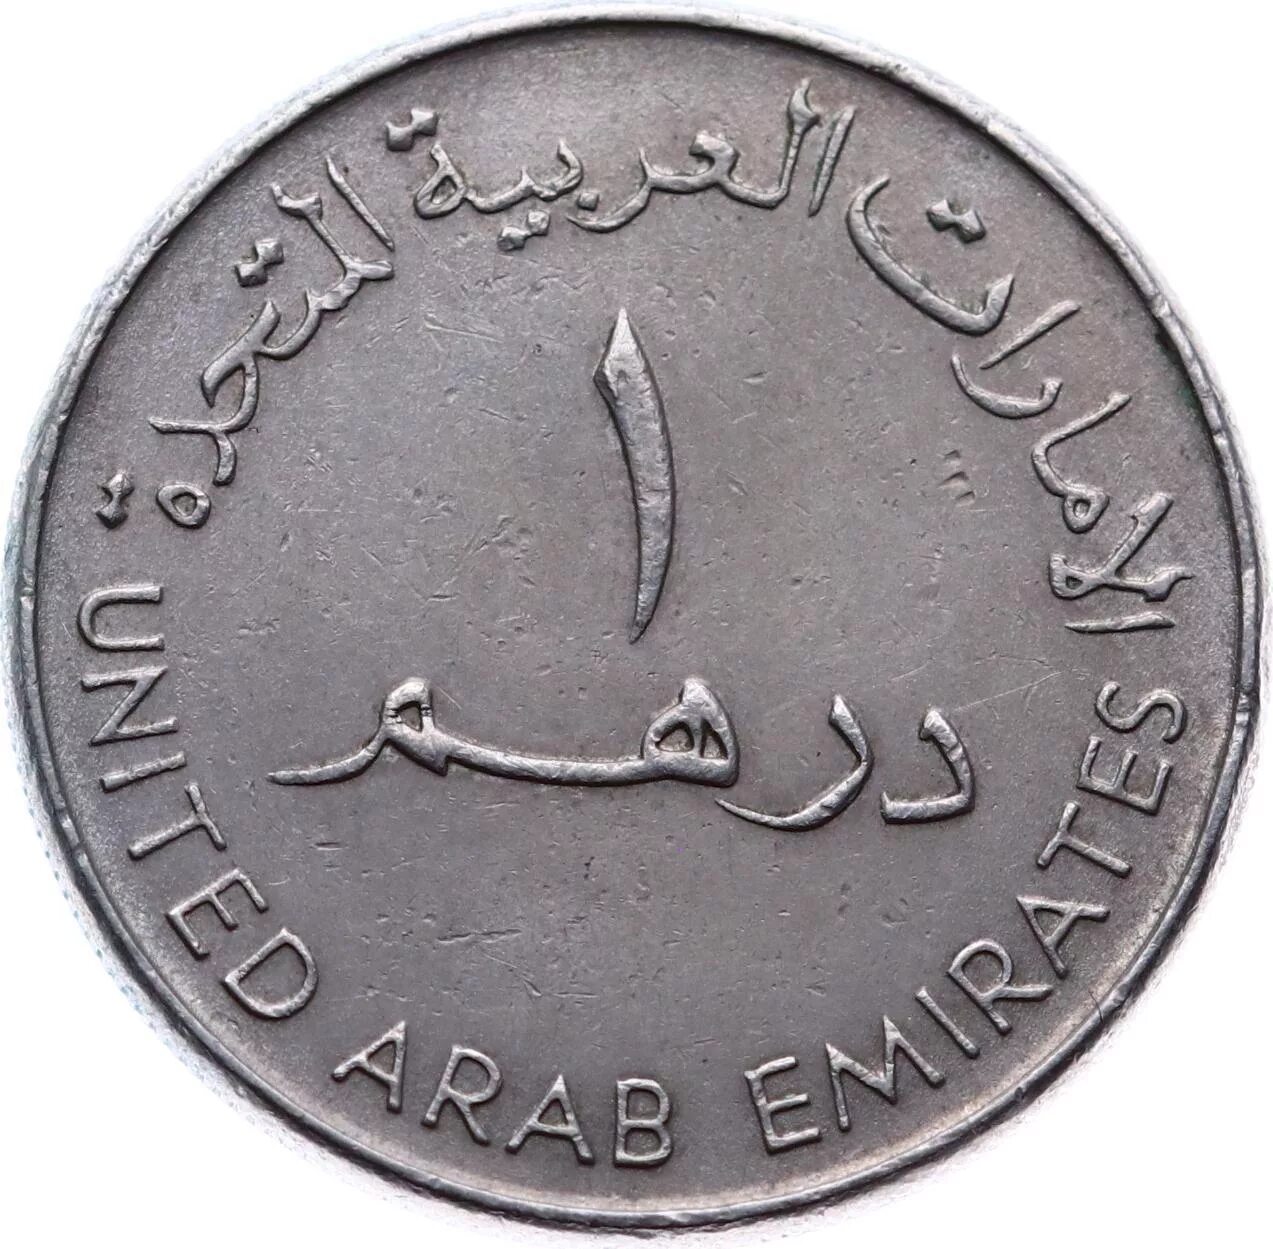 130 дирхам. Монета United arab Emirates 2007 1428. Arab Emirates монета. United arab Emirates монета 1. Монета United arab Emirates 1993-1998.